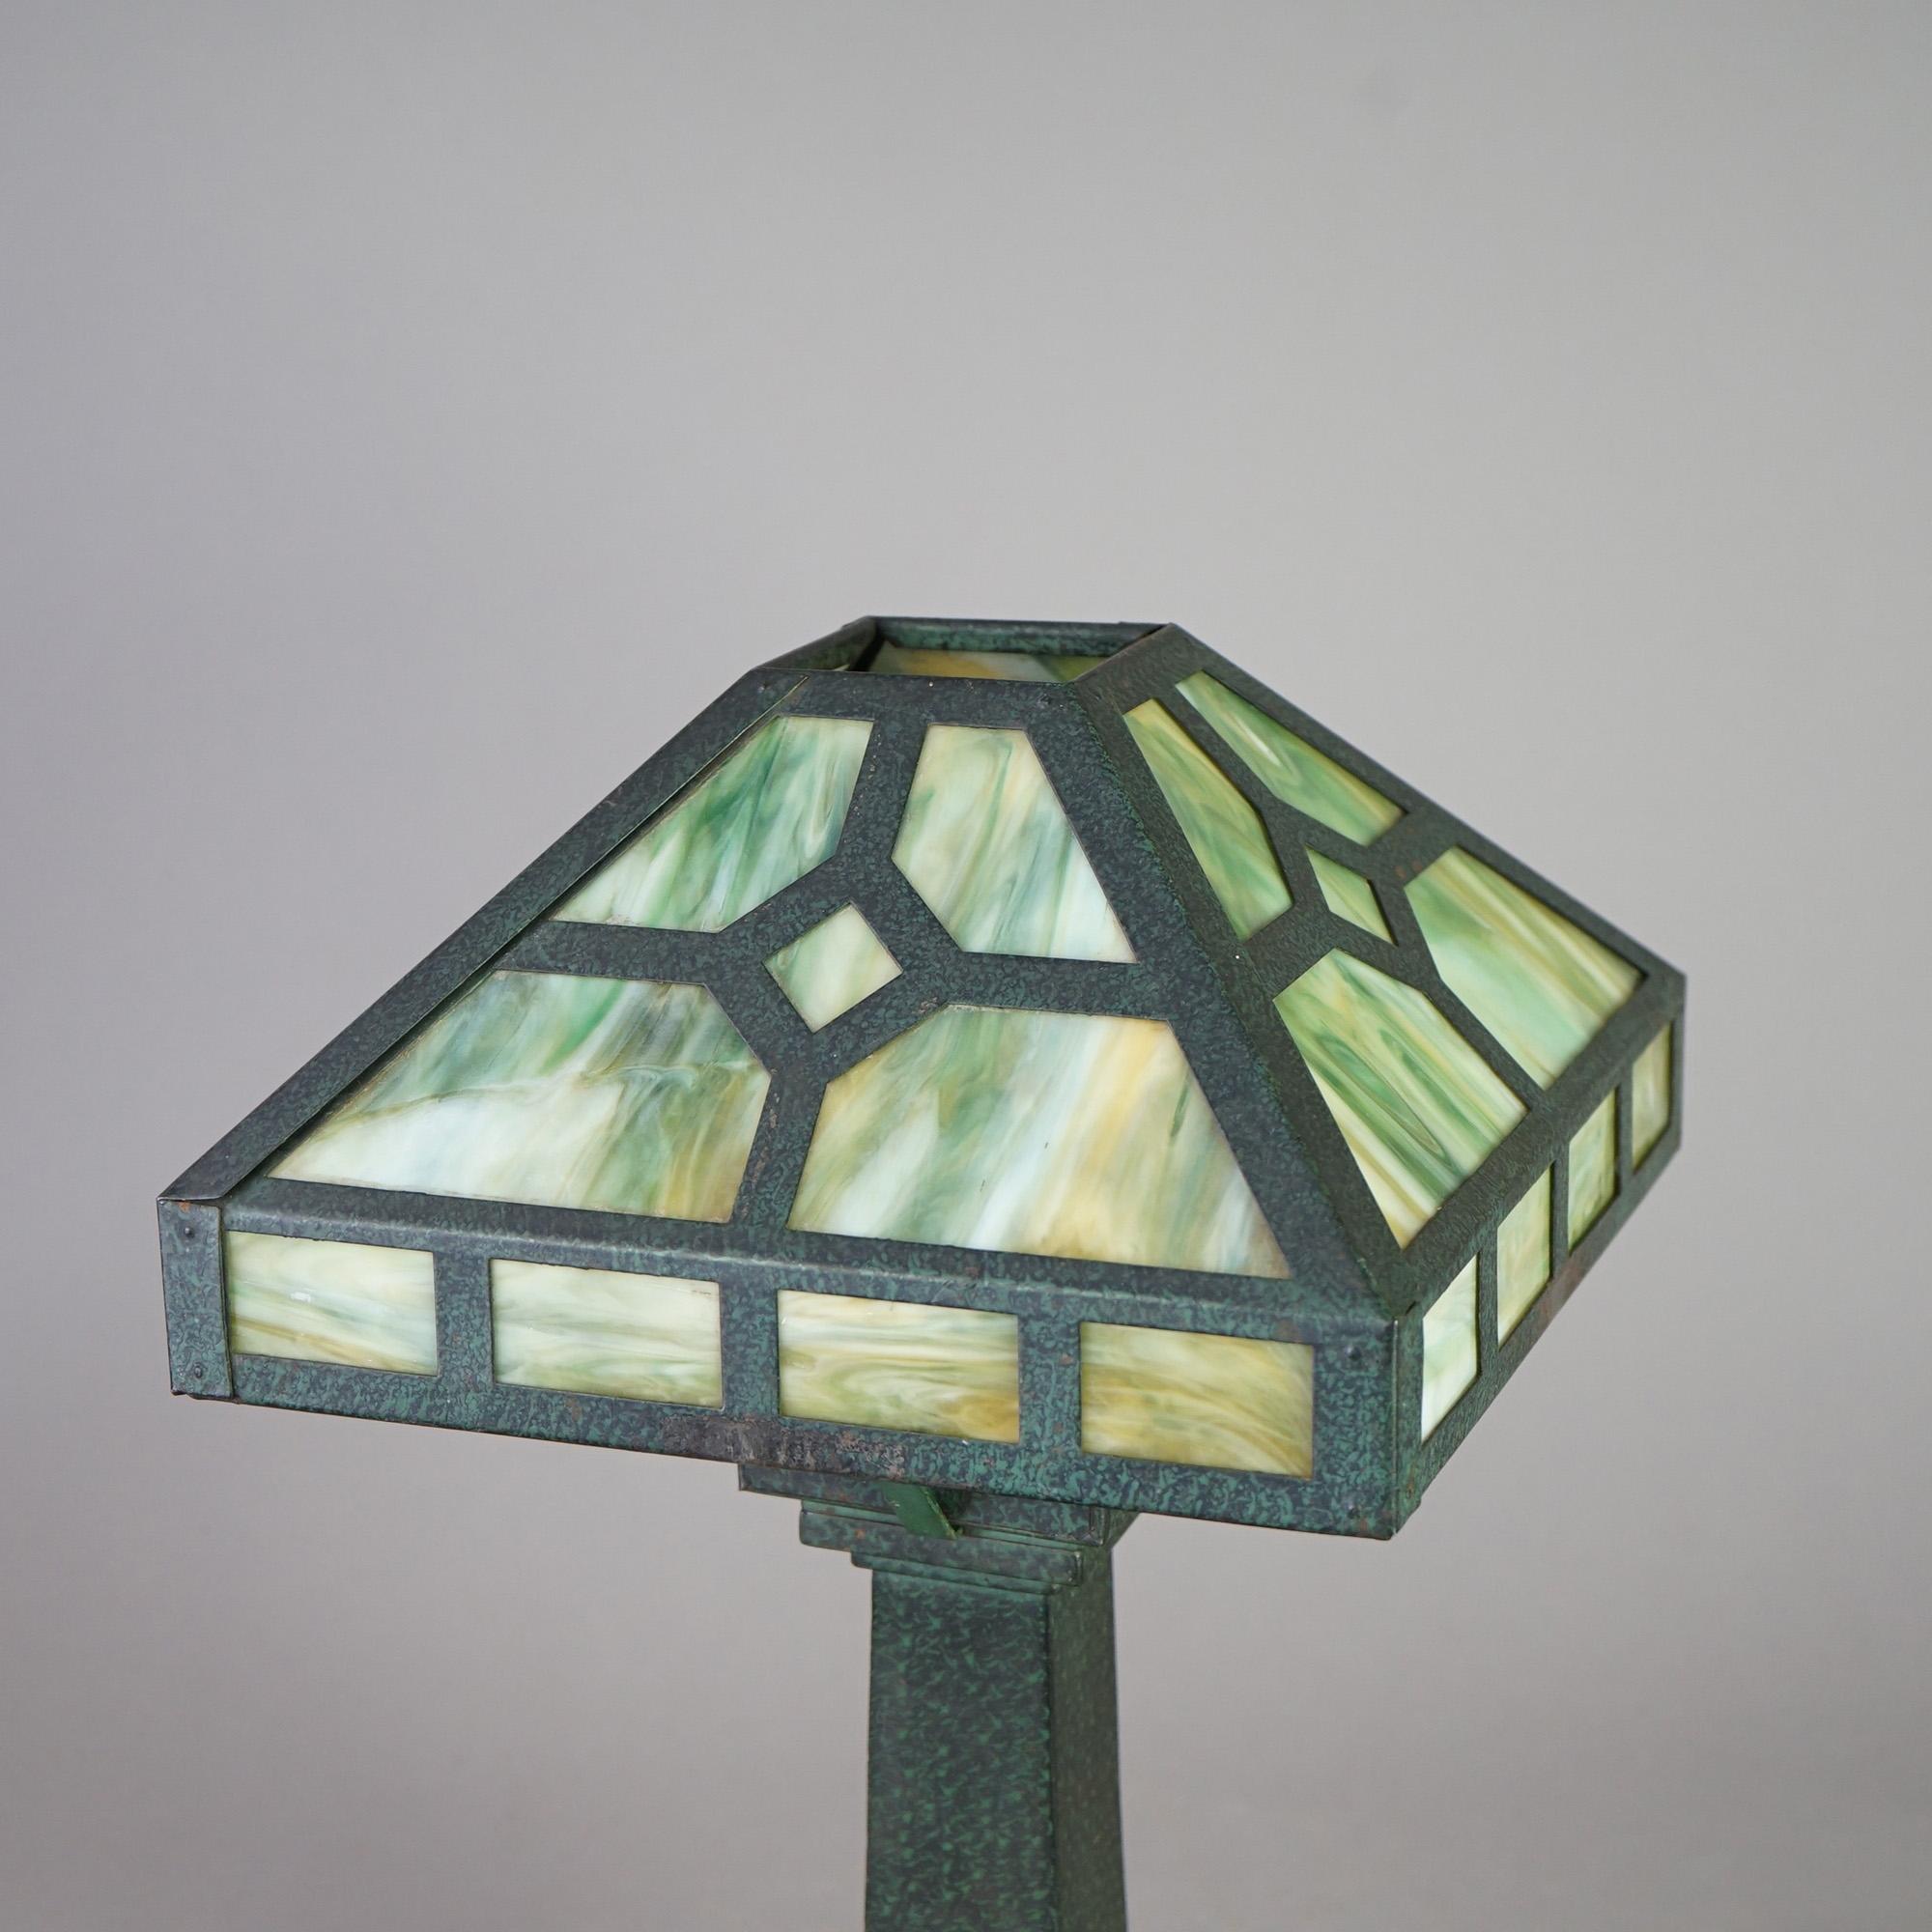 American Arts & Crafts Prairie Mission Style Verdigris Slag Glass Table Lamp 20thC